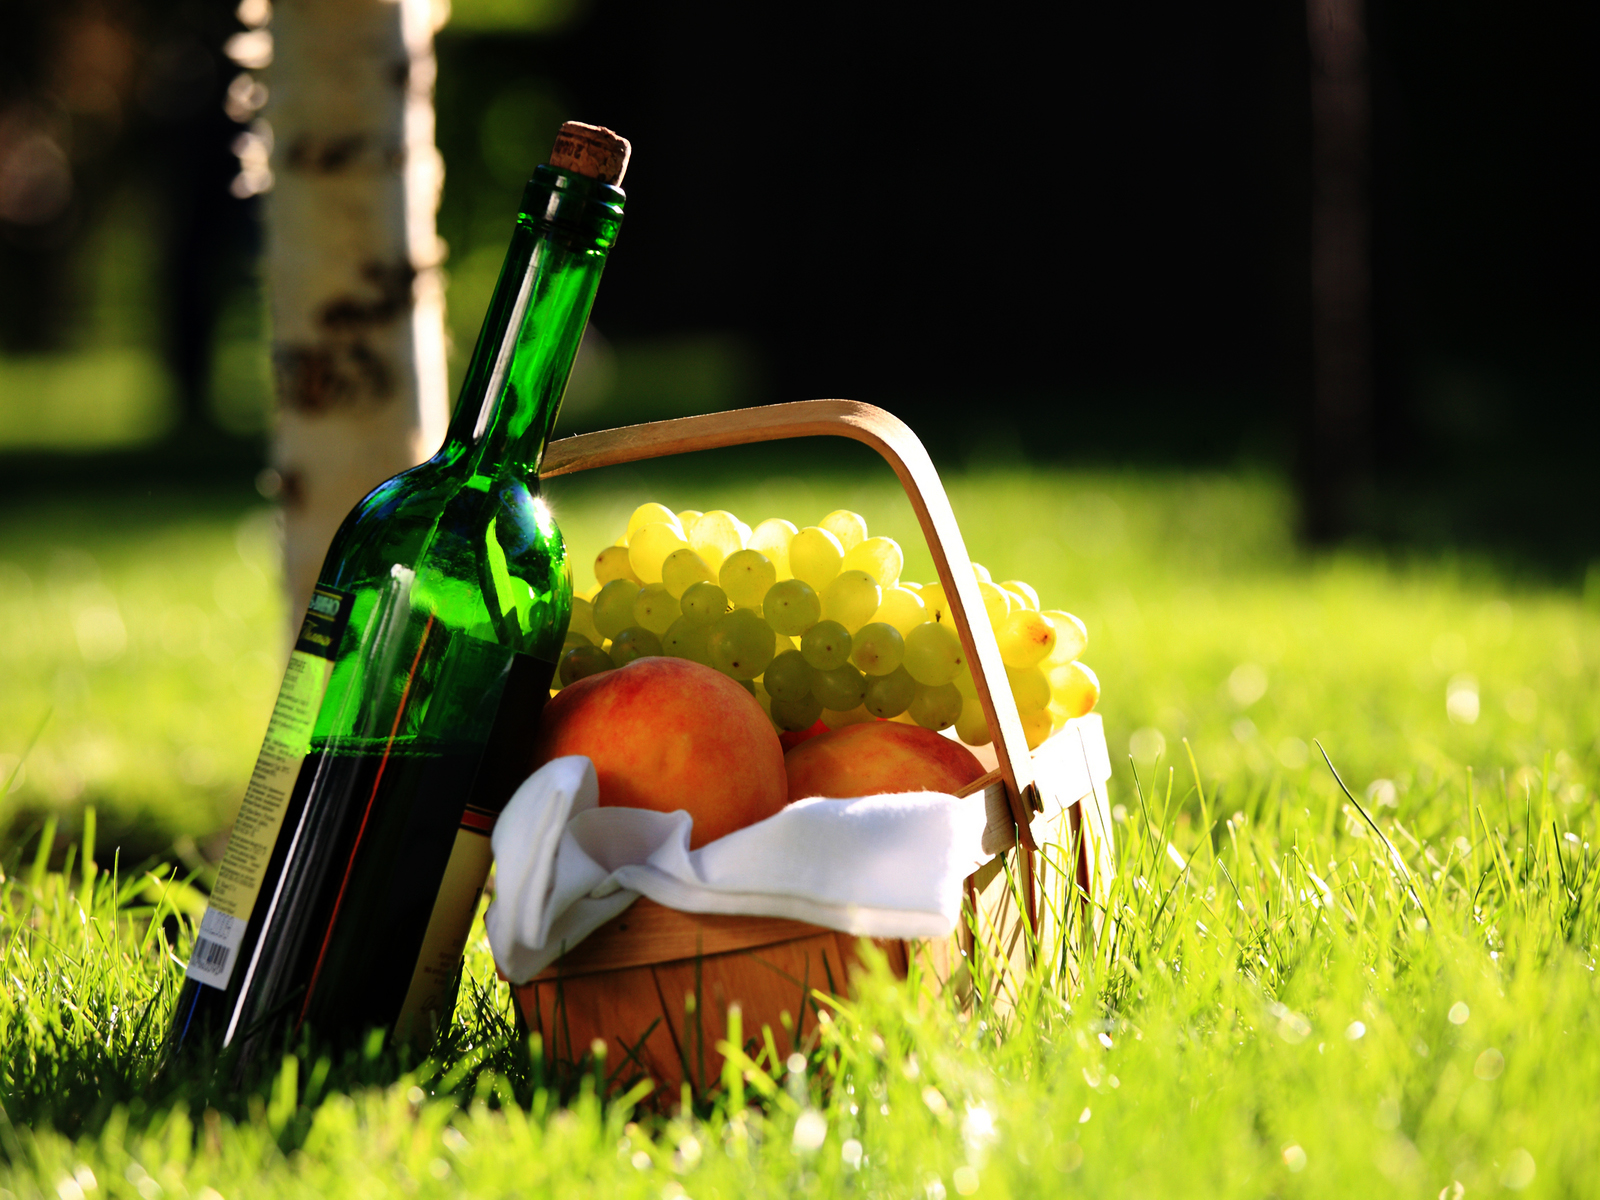 picnic wallpaper,grass,lawn,natural foods,wine bottle,bottle